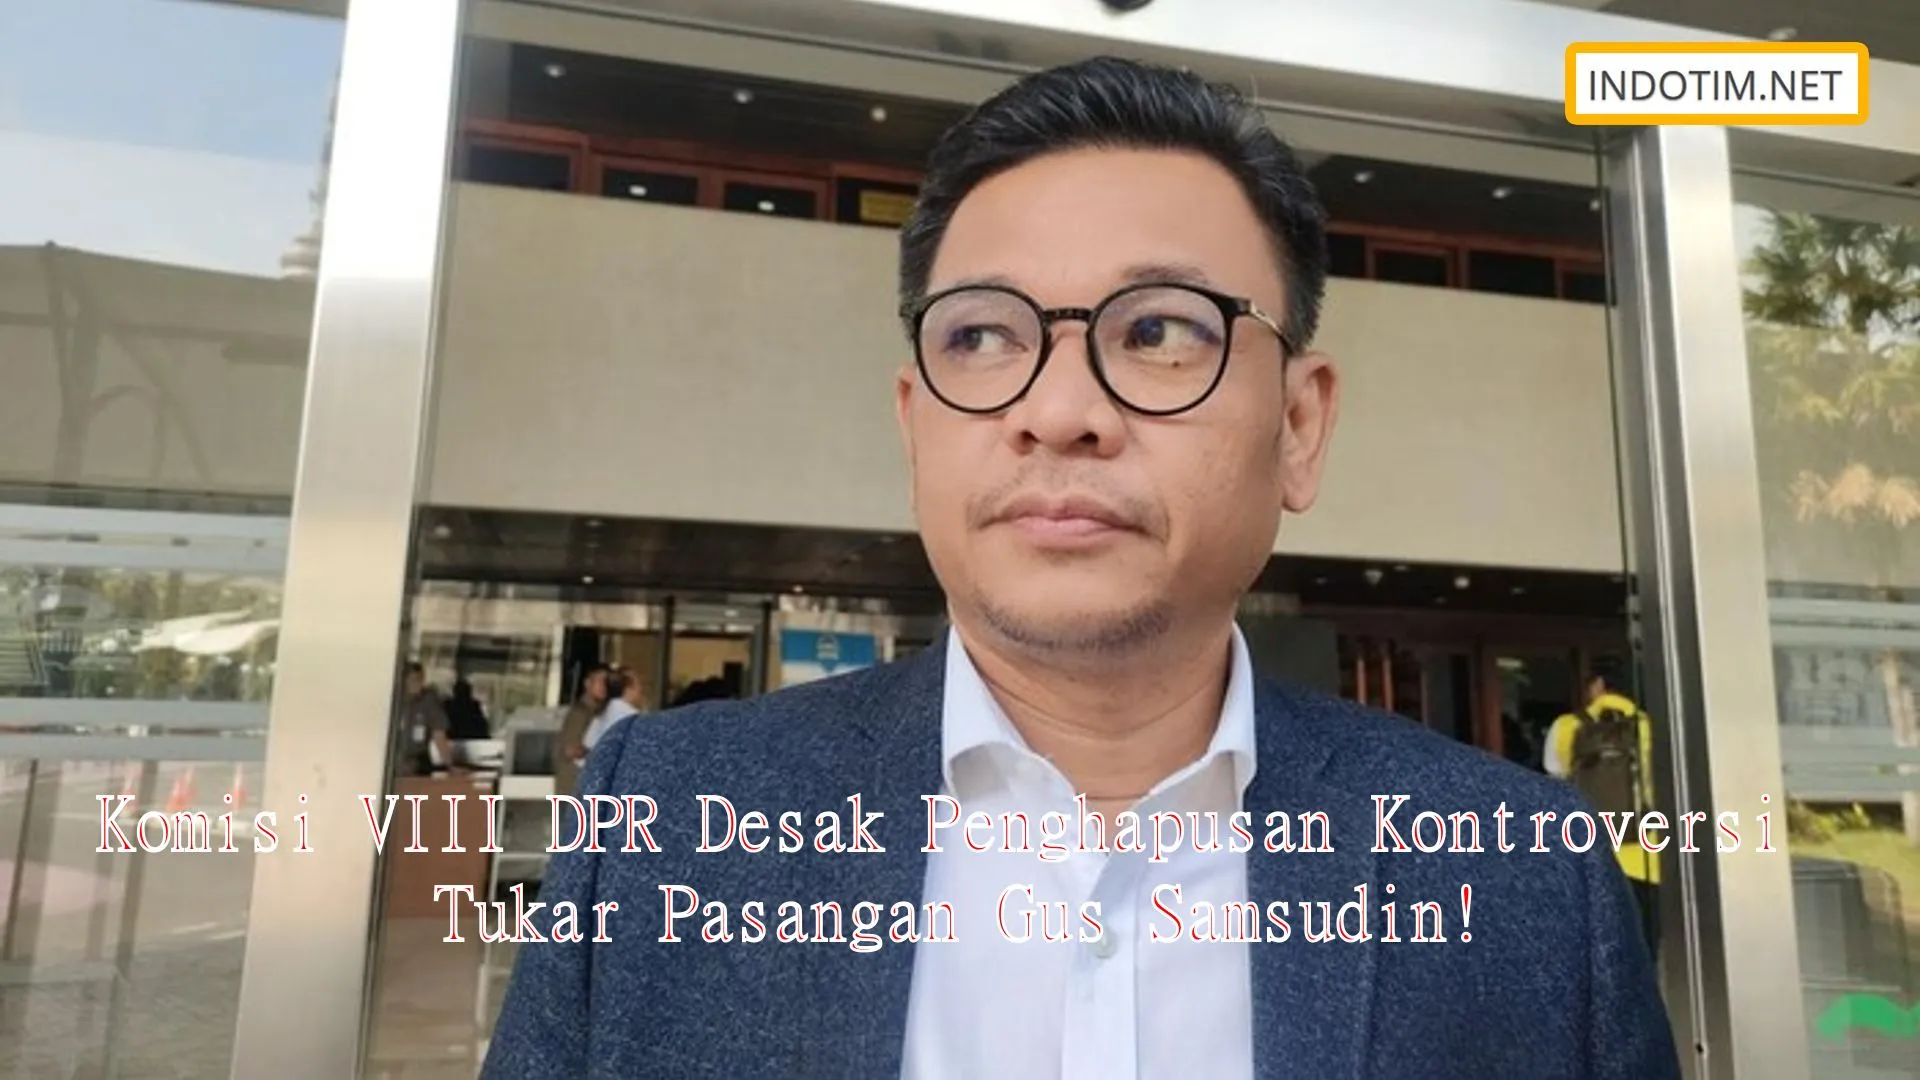 Komisi VIII DPR Desak Penghapusan Kontroversi Tukar Pasangan Gus Samsudin!